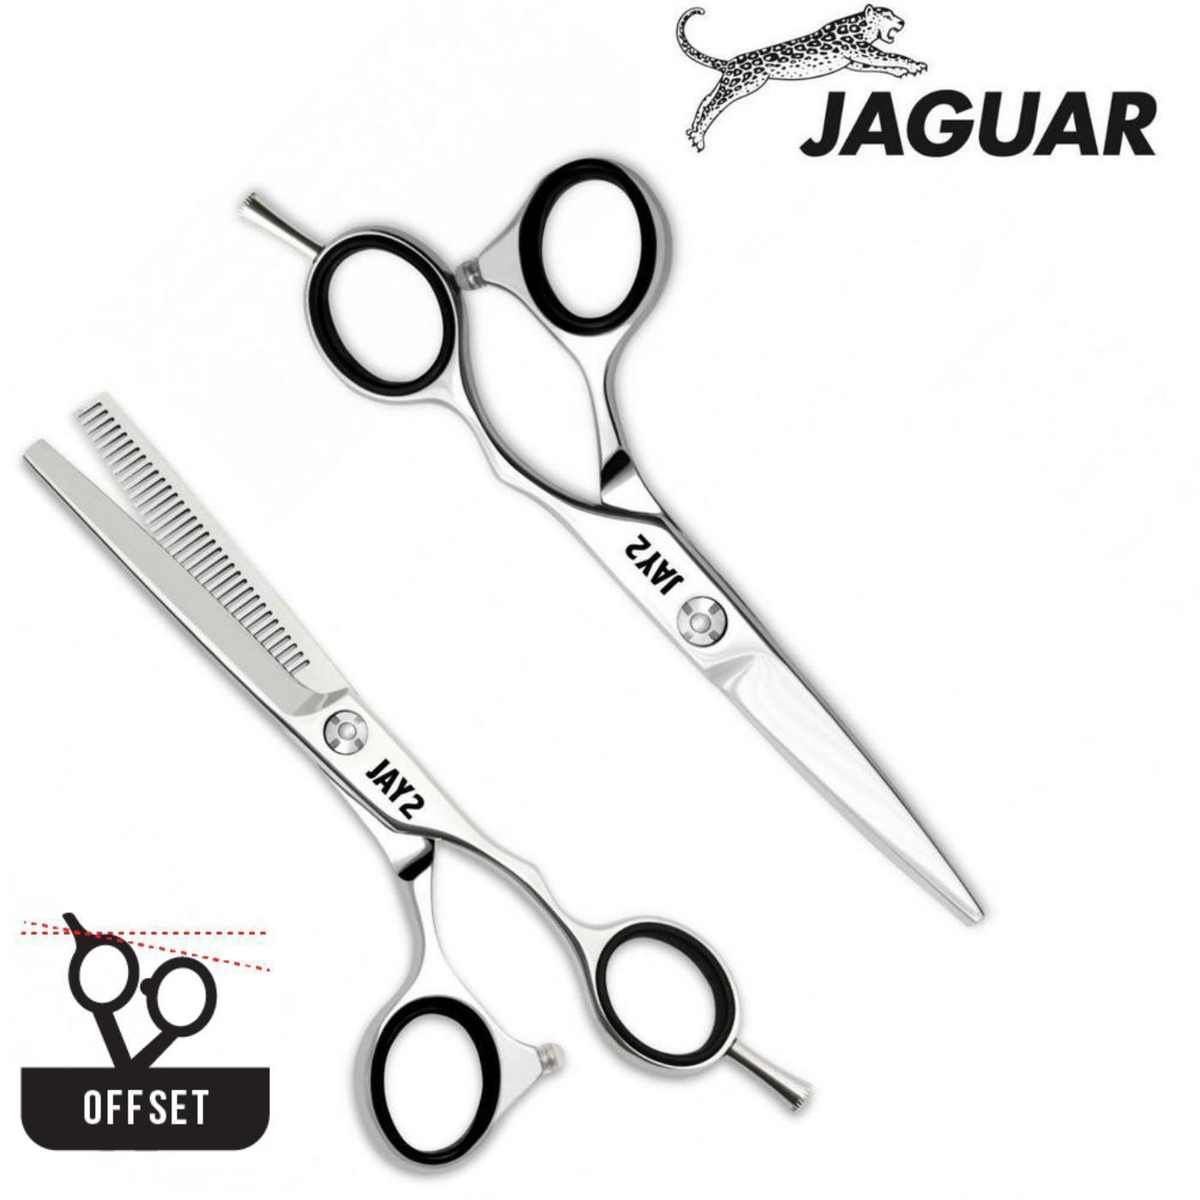 Jaguar Jay2 Scissors